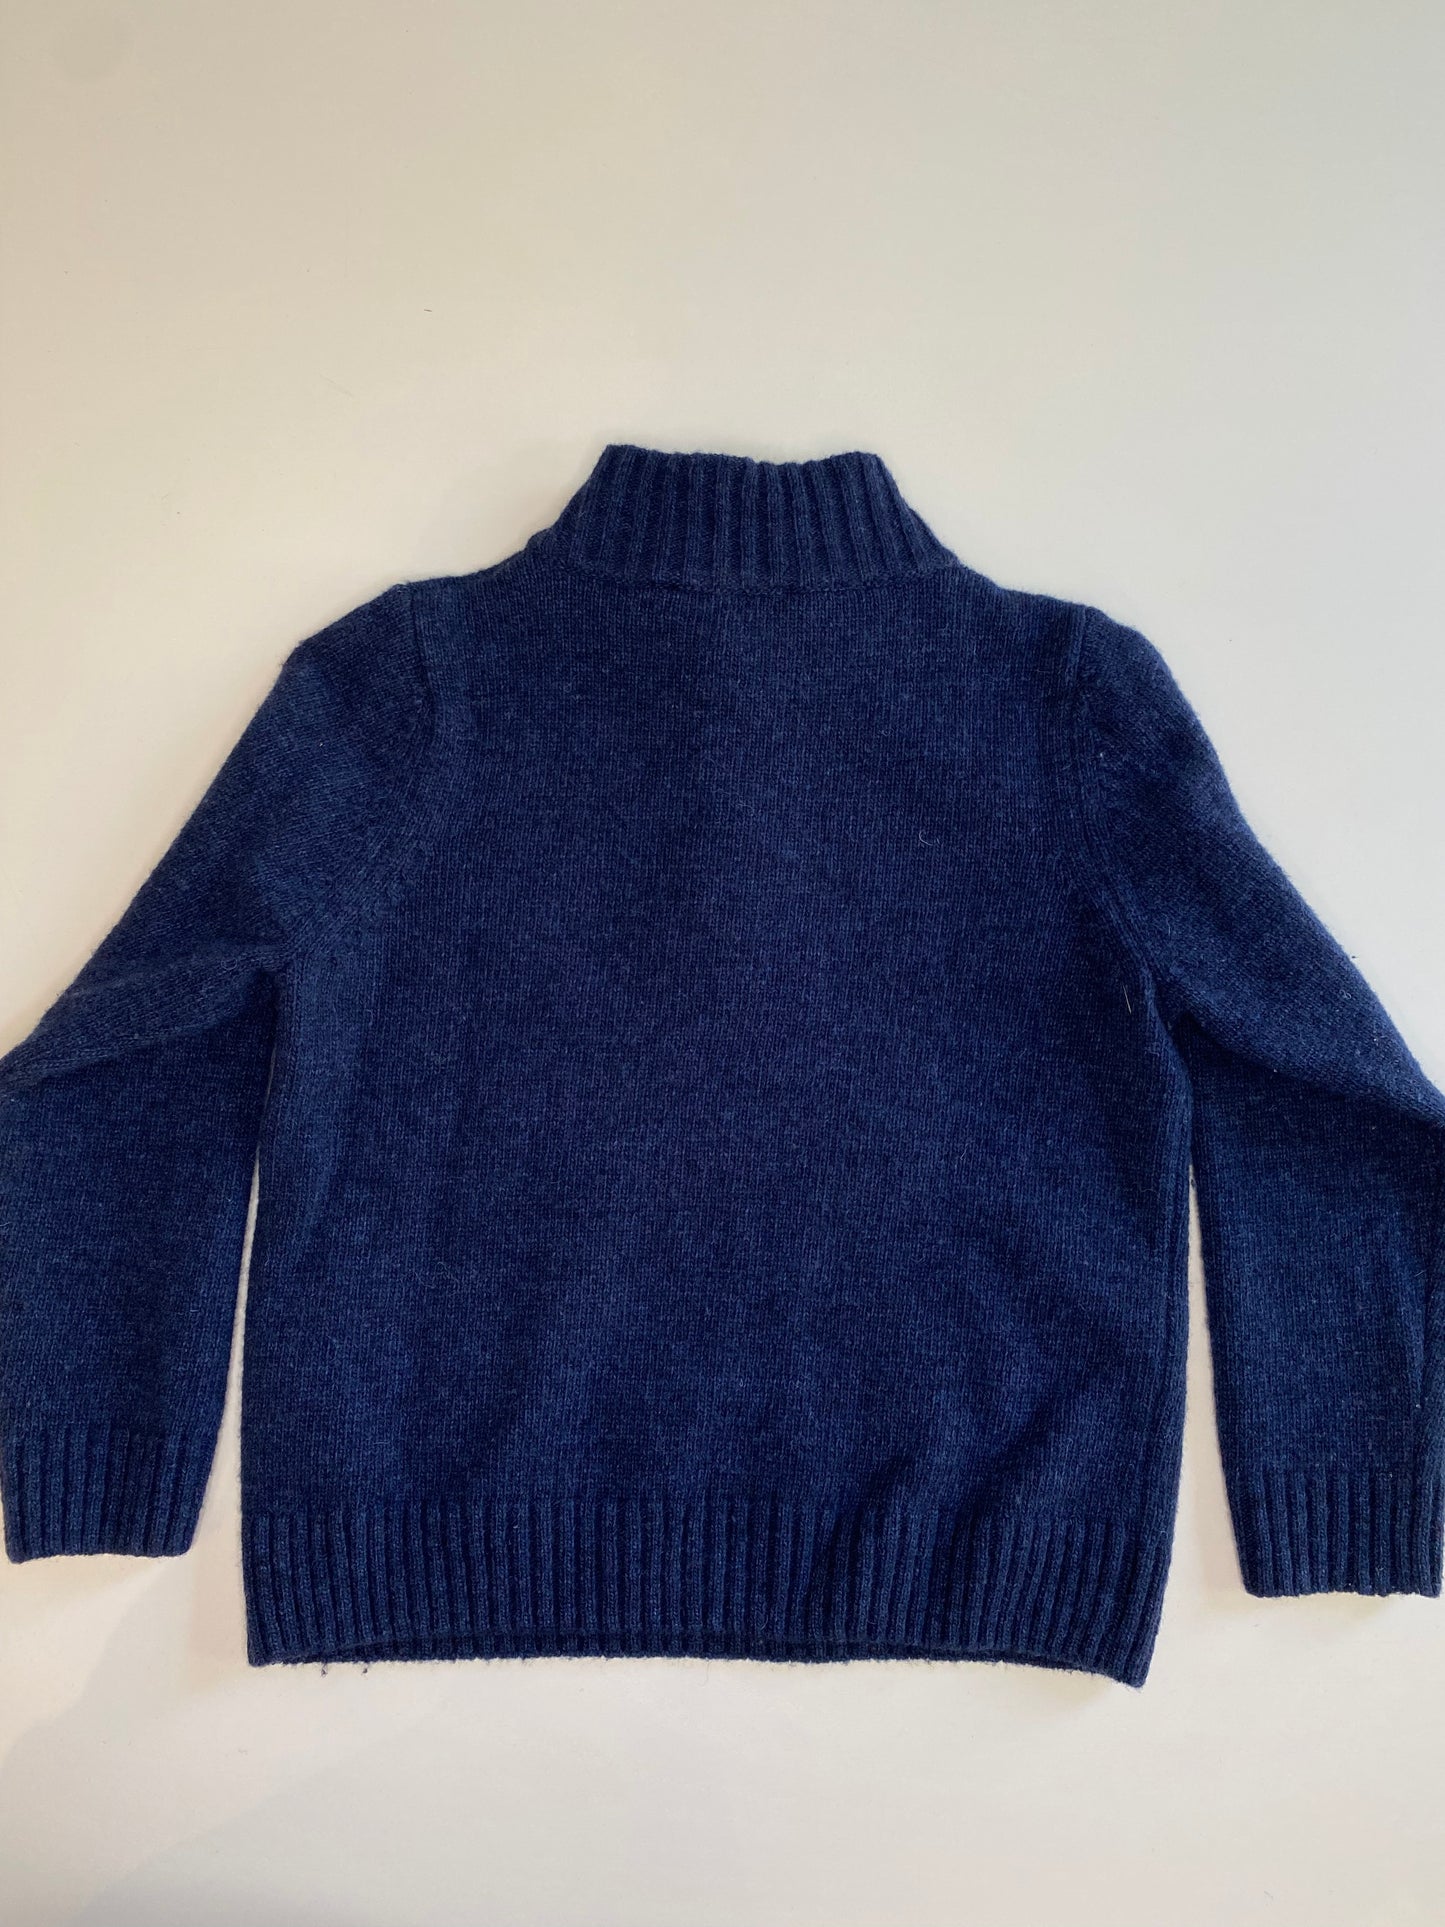 THOMAS BROWN knitwear / 4-5Y